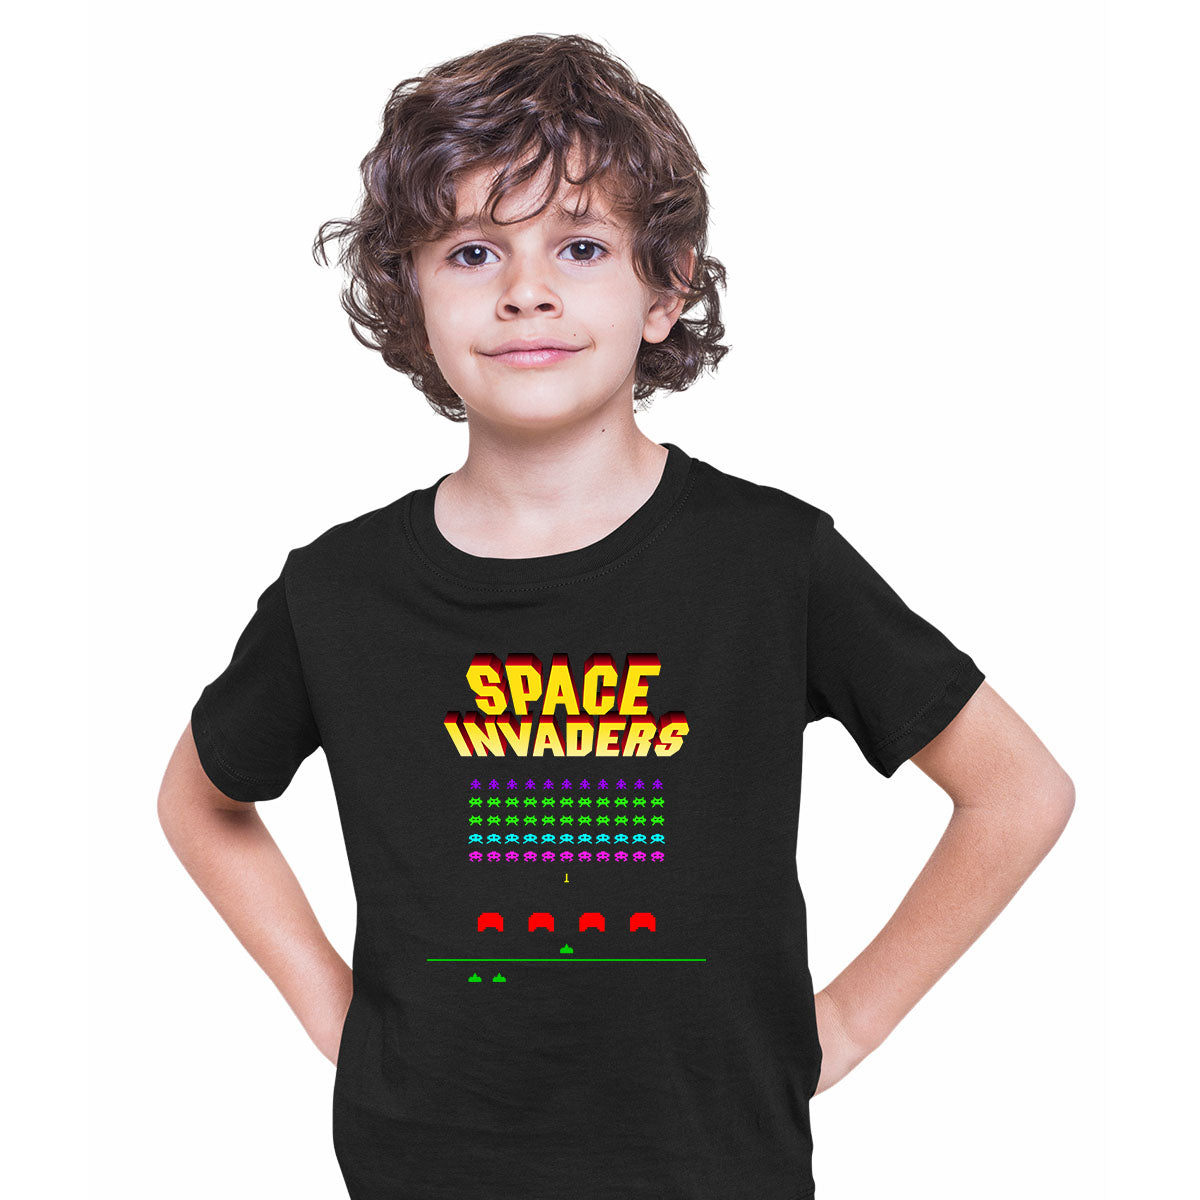 Space Invaders Inspired T-shirt - Retro Atari Arcade Game Gaming Tee Shirt for Kids NEW - Kuzi Tees